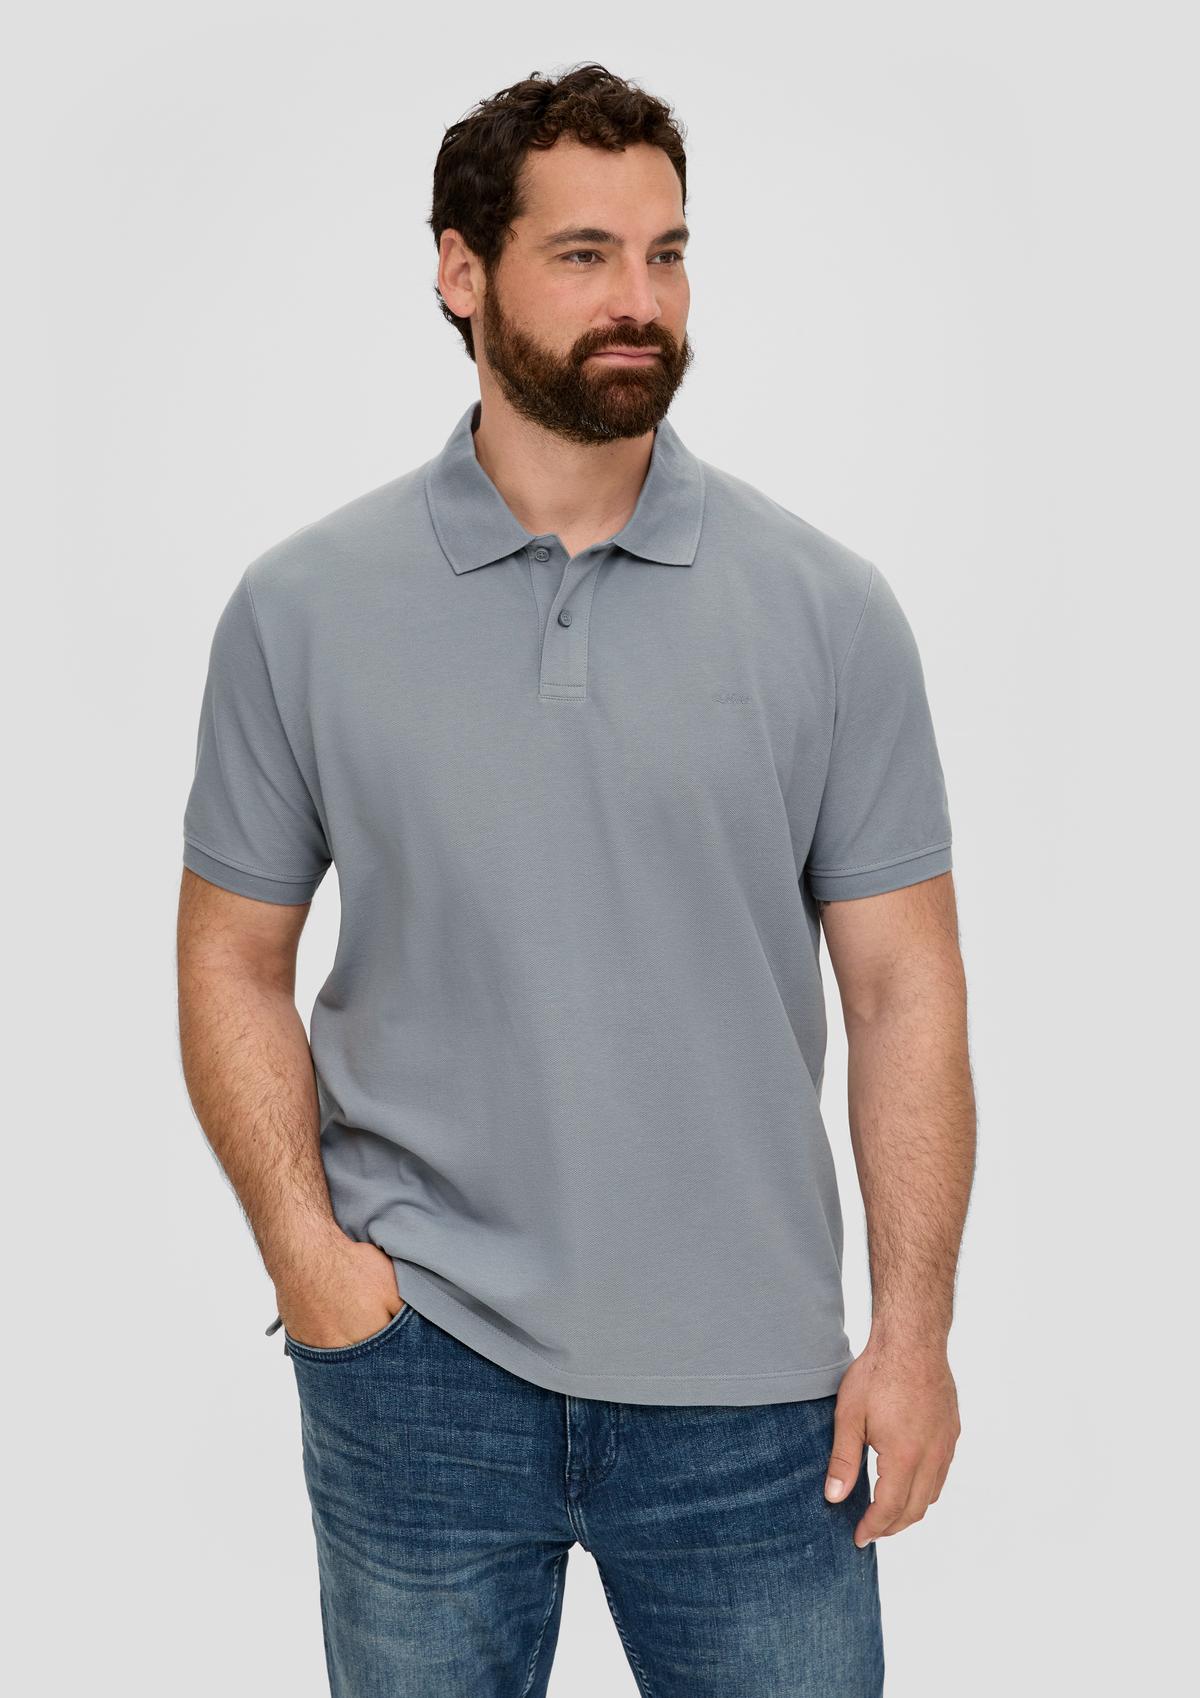 minimalist navy with Polo - a print shirt